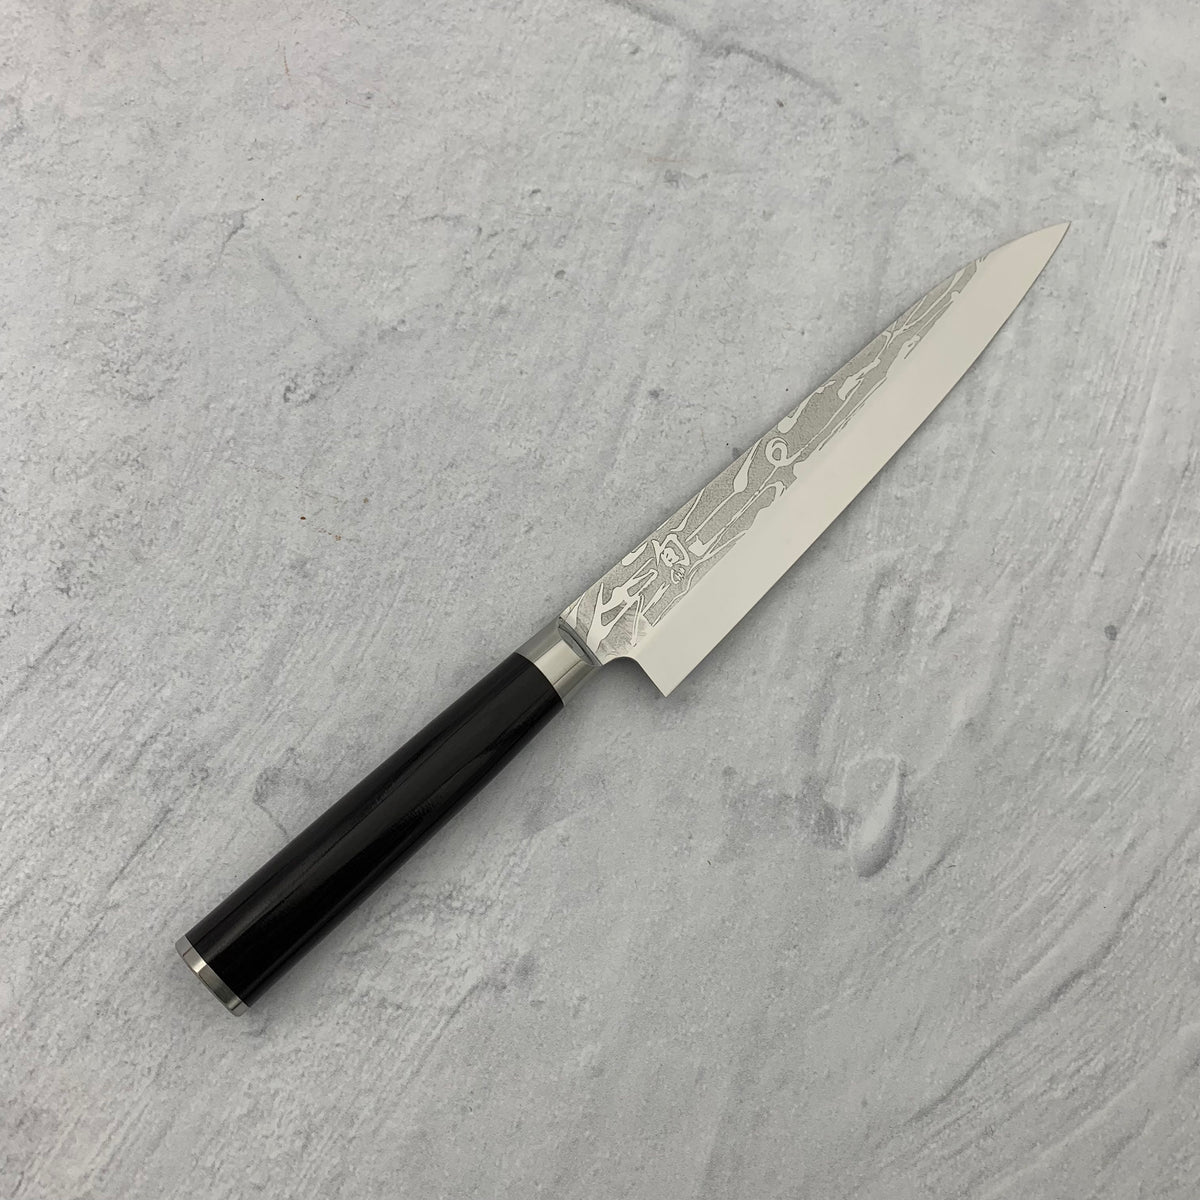 Kai Shun Pro Sho Yanagiba Knife 210mm (8.2) #VG-0004– Knives for Chefs